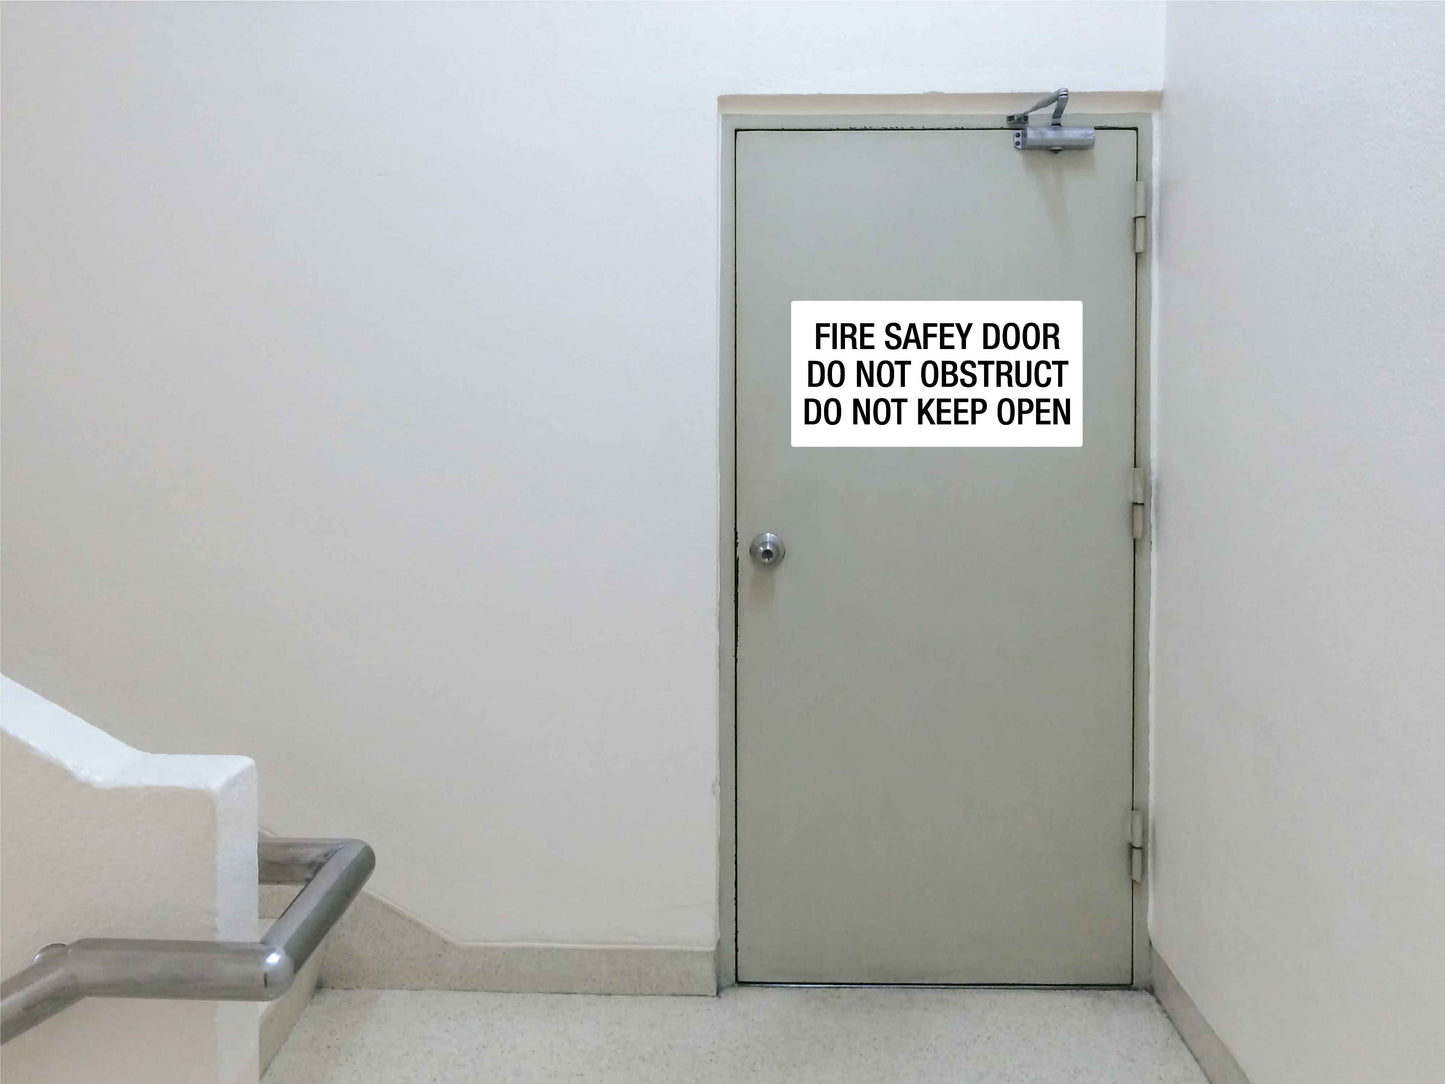 Staff Toilets - Statutory Sign